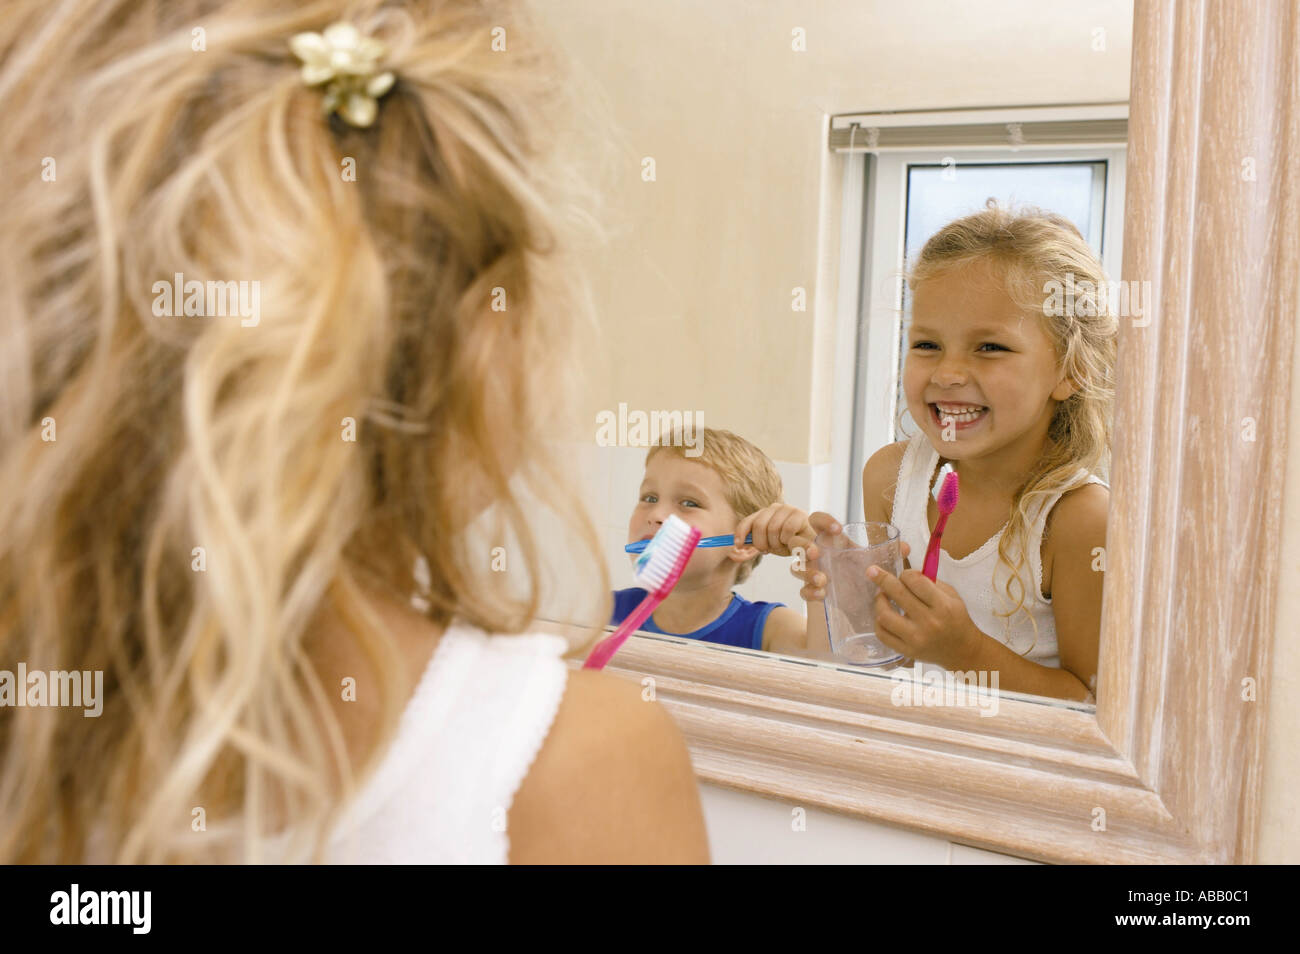 Kids brushing teeth Stock Photo